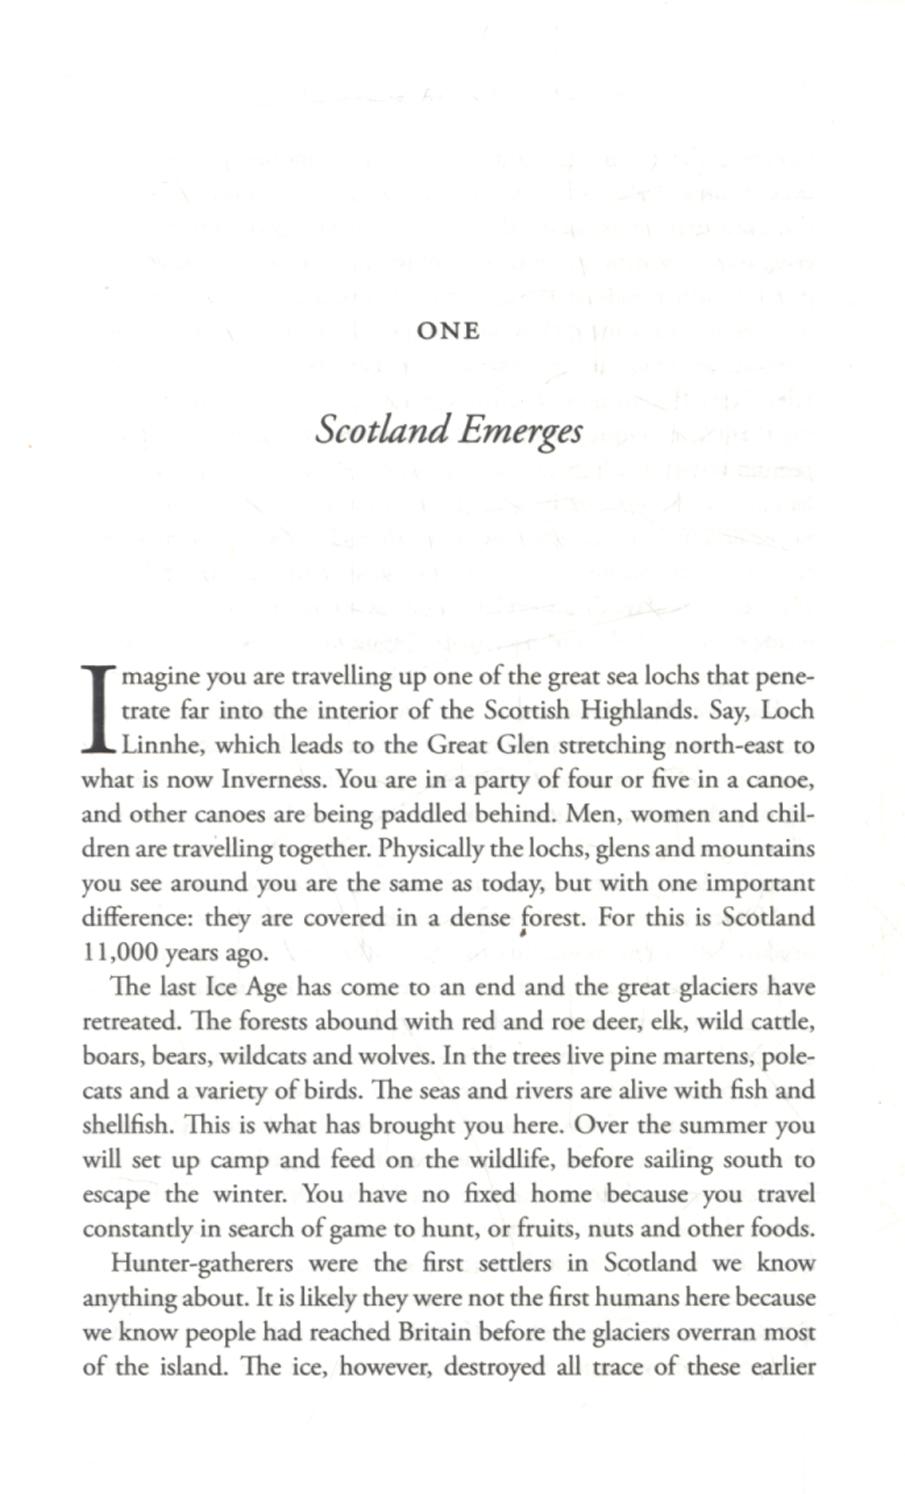 People's History of Scotland